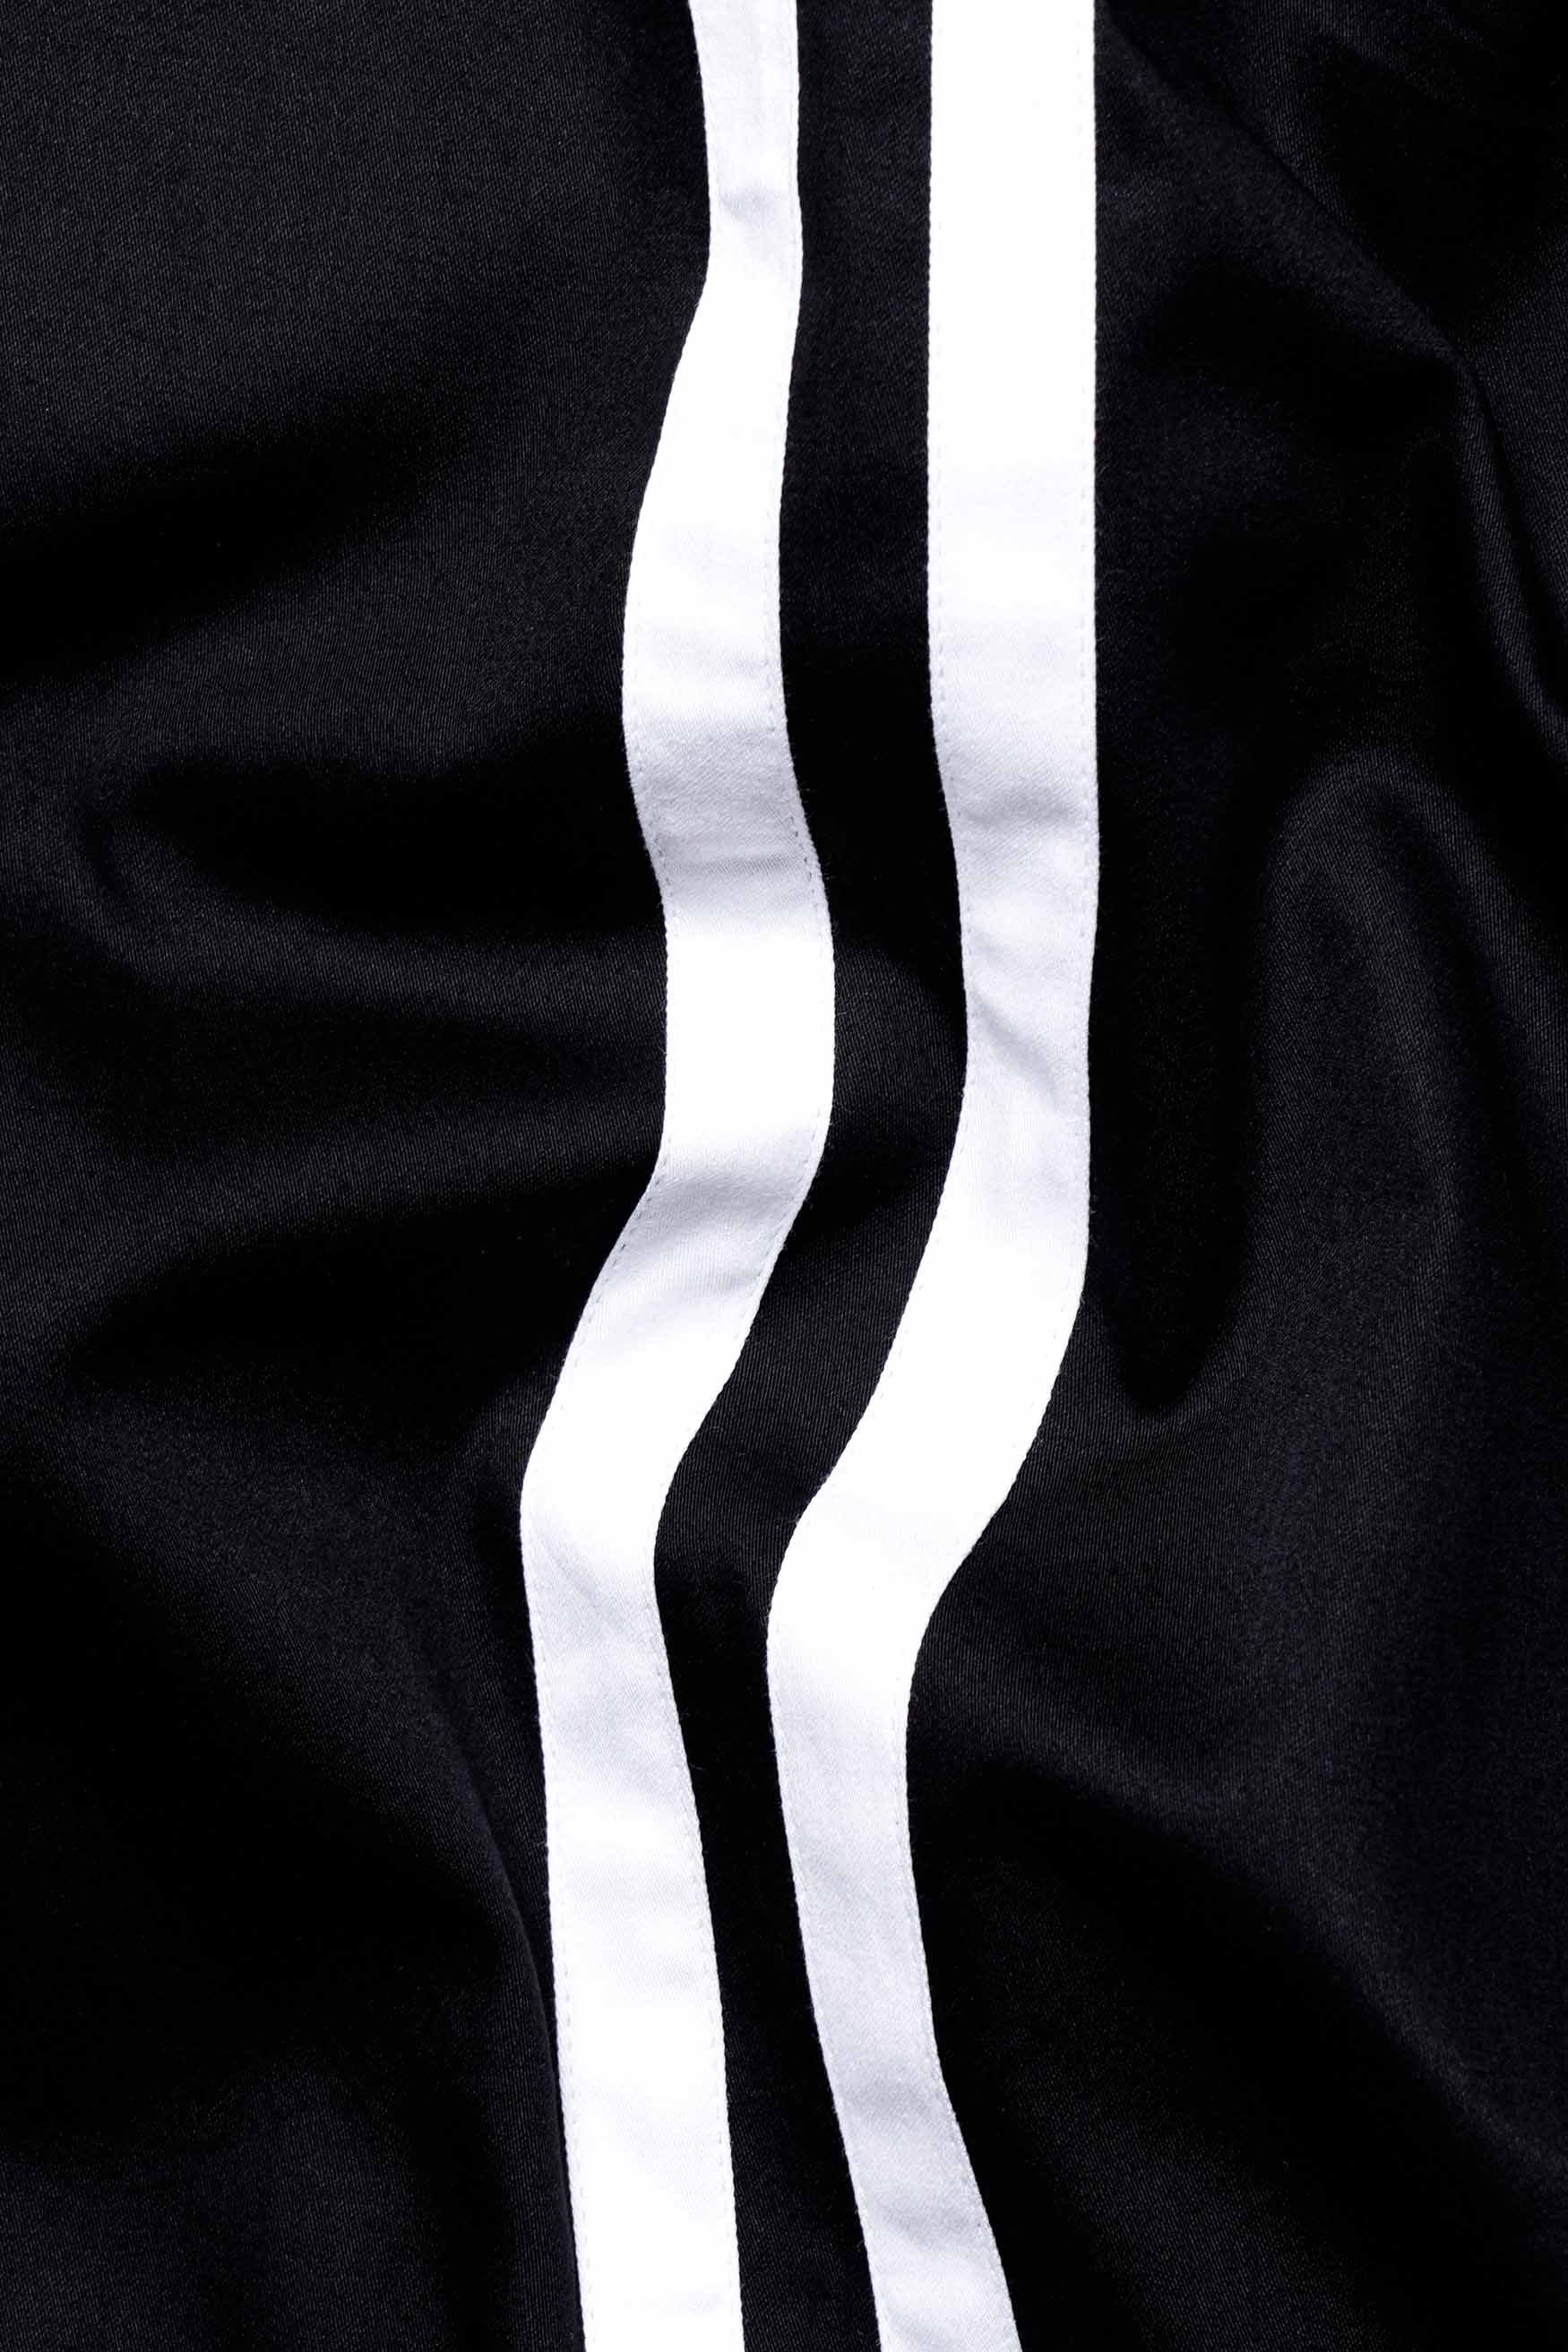 Jade Black Brand Logo Embroidered with Dual Striped Subtle Sheen Super Soft Premium Cotton Designer Shirt 12097-BLK-P120-38, 12097-BLK-P120-H-38, 12097-BLK-P120-39, 12097-BLK-P120-H-39, 12097-BLK-P120-40, 12097-BLK-P120-H-40, 12097-BLK-P120-42, 12097-BLK-P120-H-42, 12097-BLK-P120-44, 12097-BLK-P120-H-44, 12097-BLK-P120-46, 12097-BLK-P120-H-46, 12097-BLK-P120-48, 12097-BLK-P120-H-48, 12097-BLK-P120-50, 12097-BLK-P120-H-50, 12097-BLK-P120-52, 12097-BLK-P120-H-52